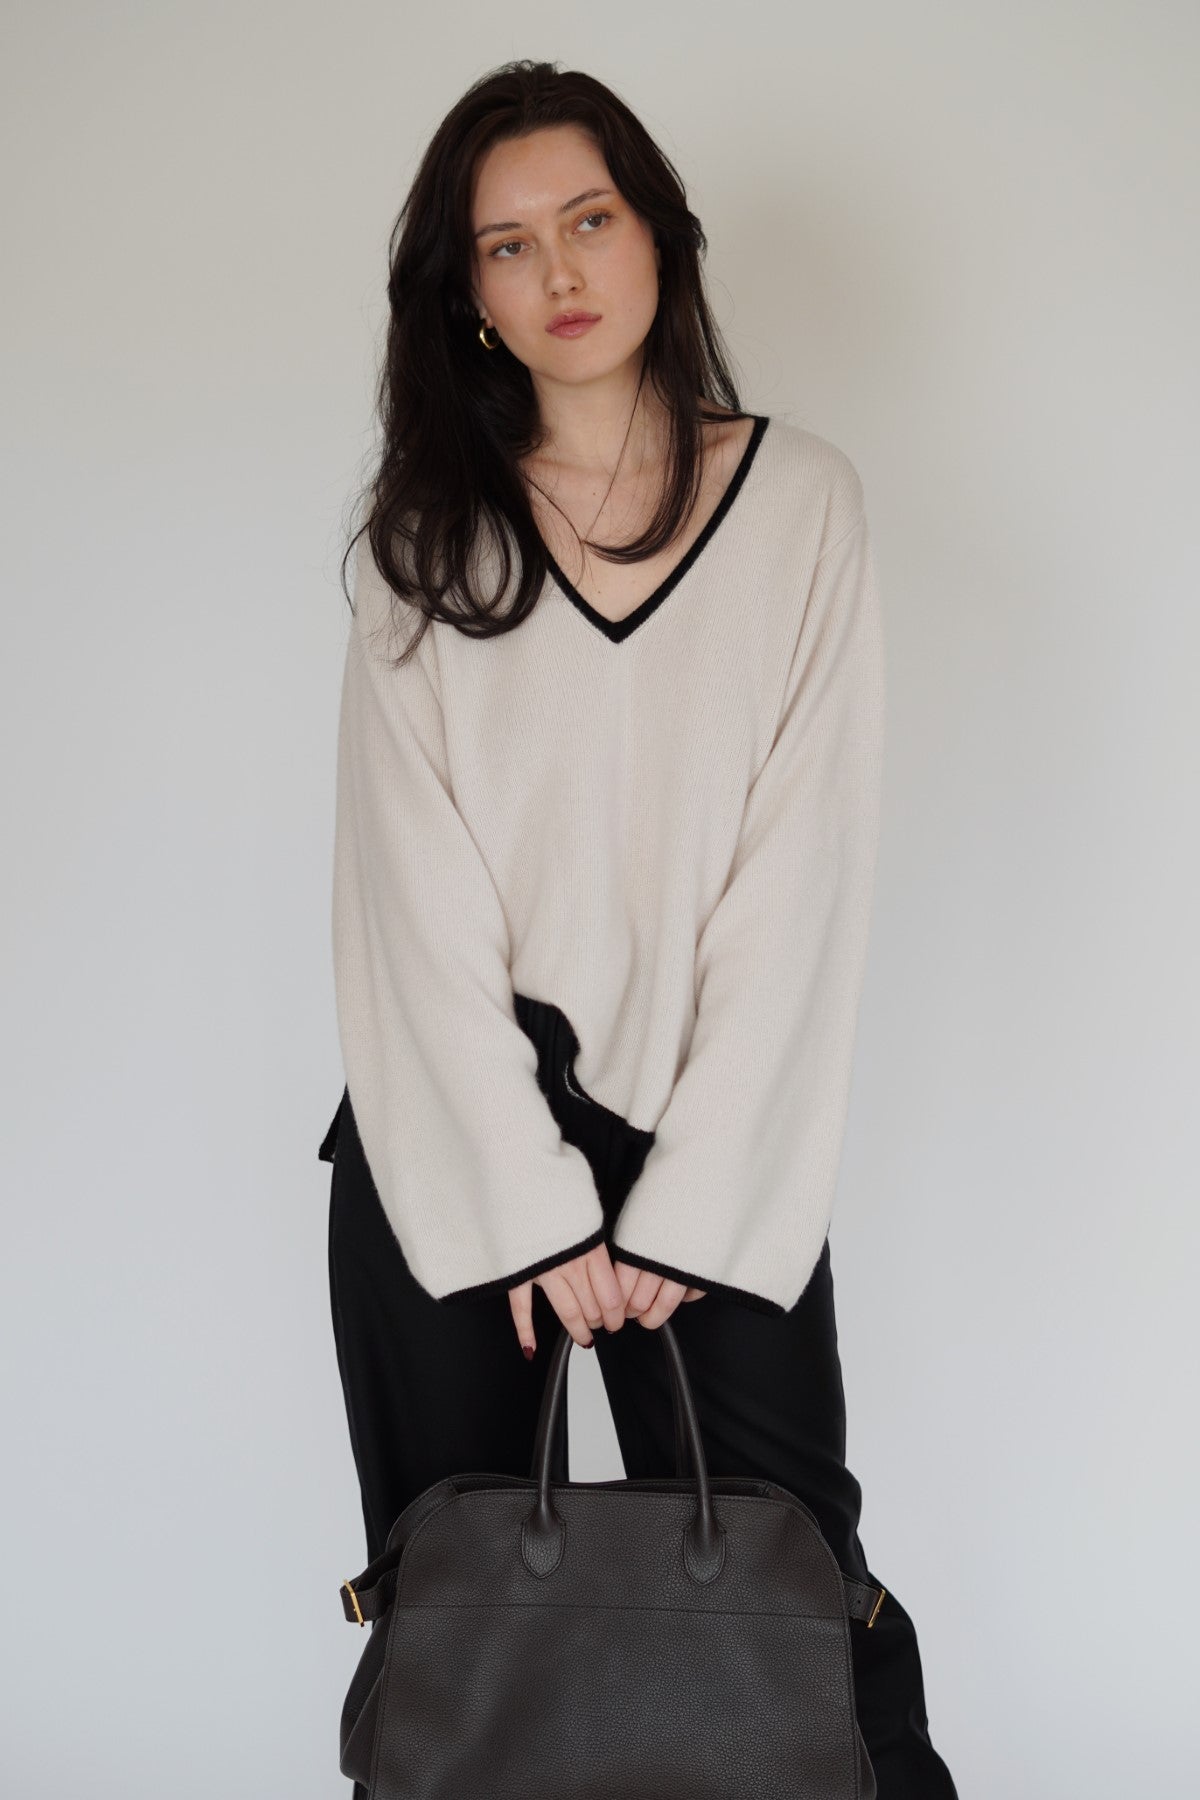 Cashmere sweater black edges